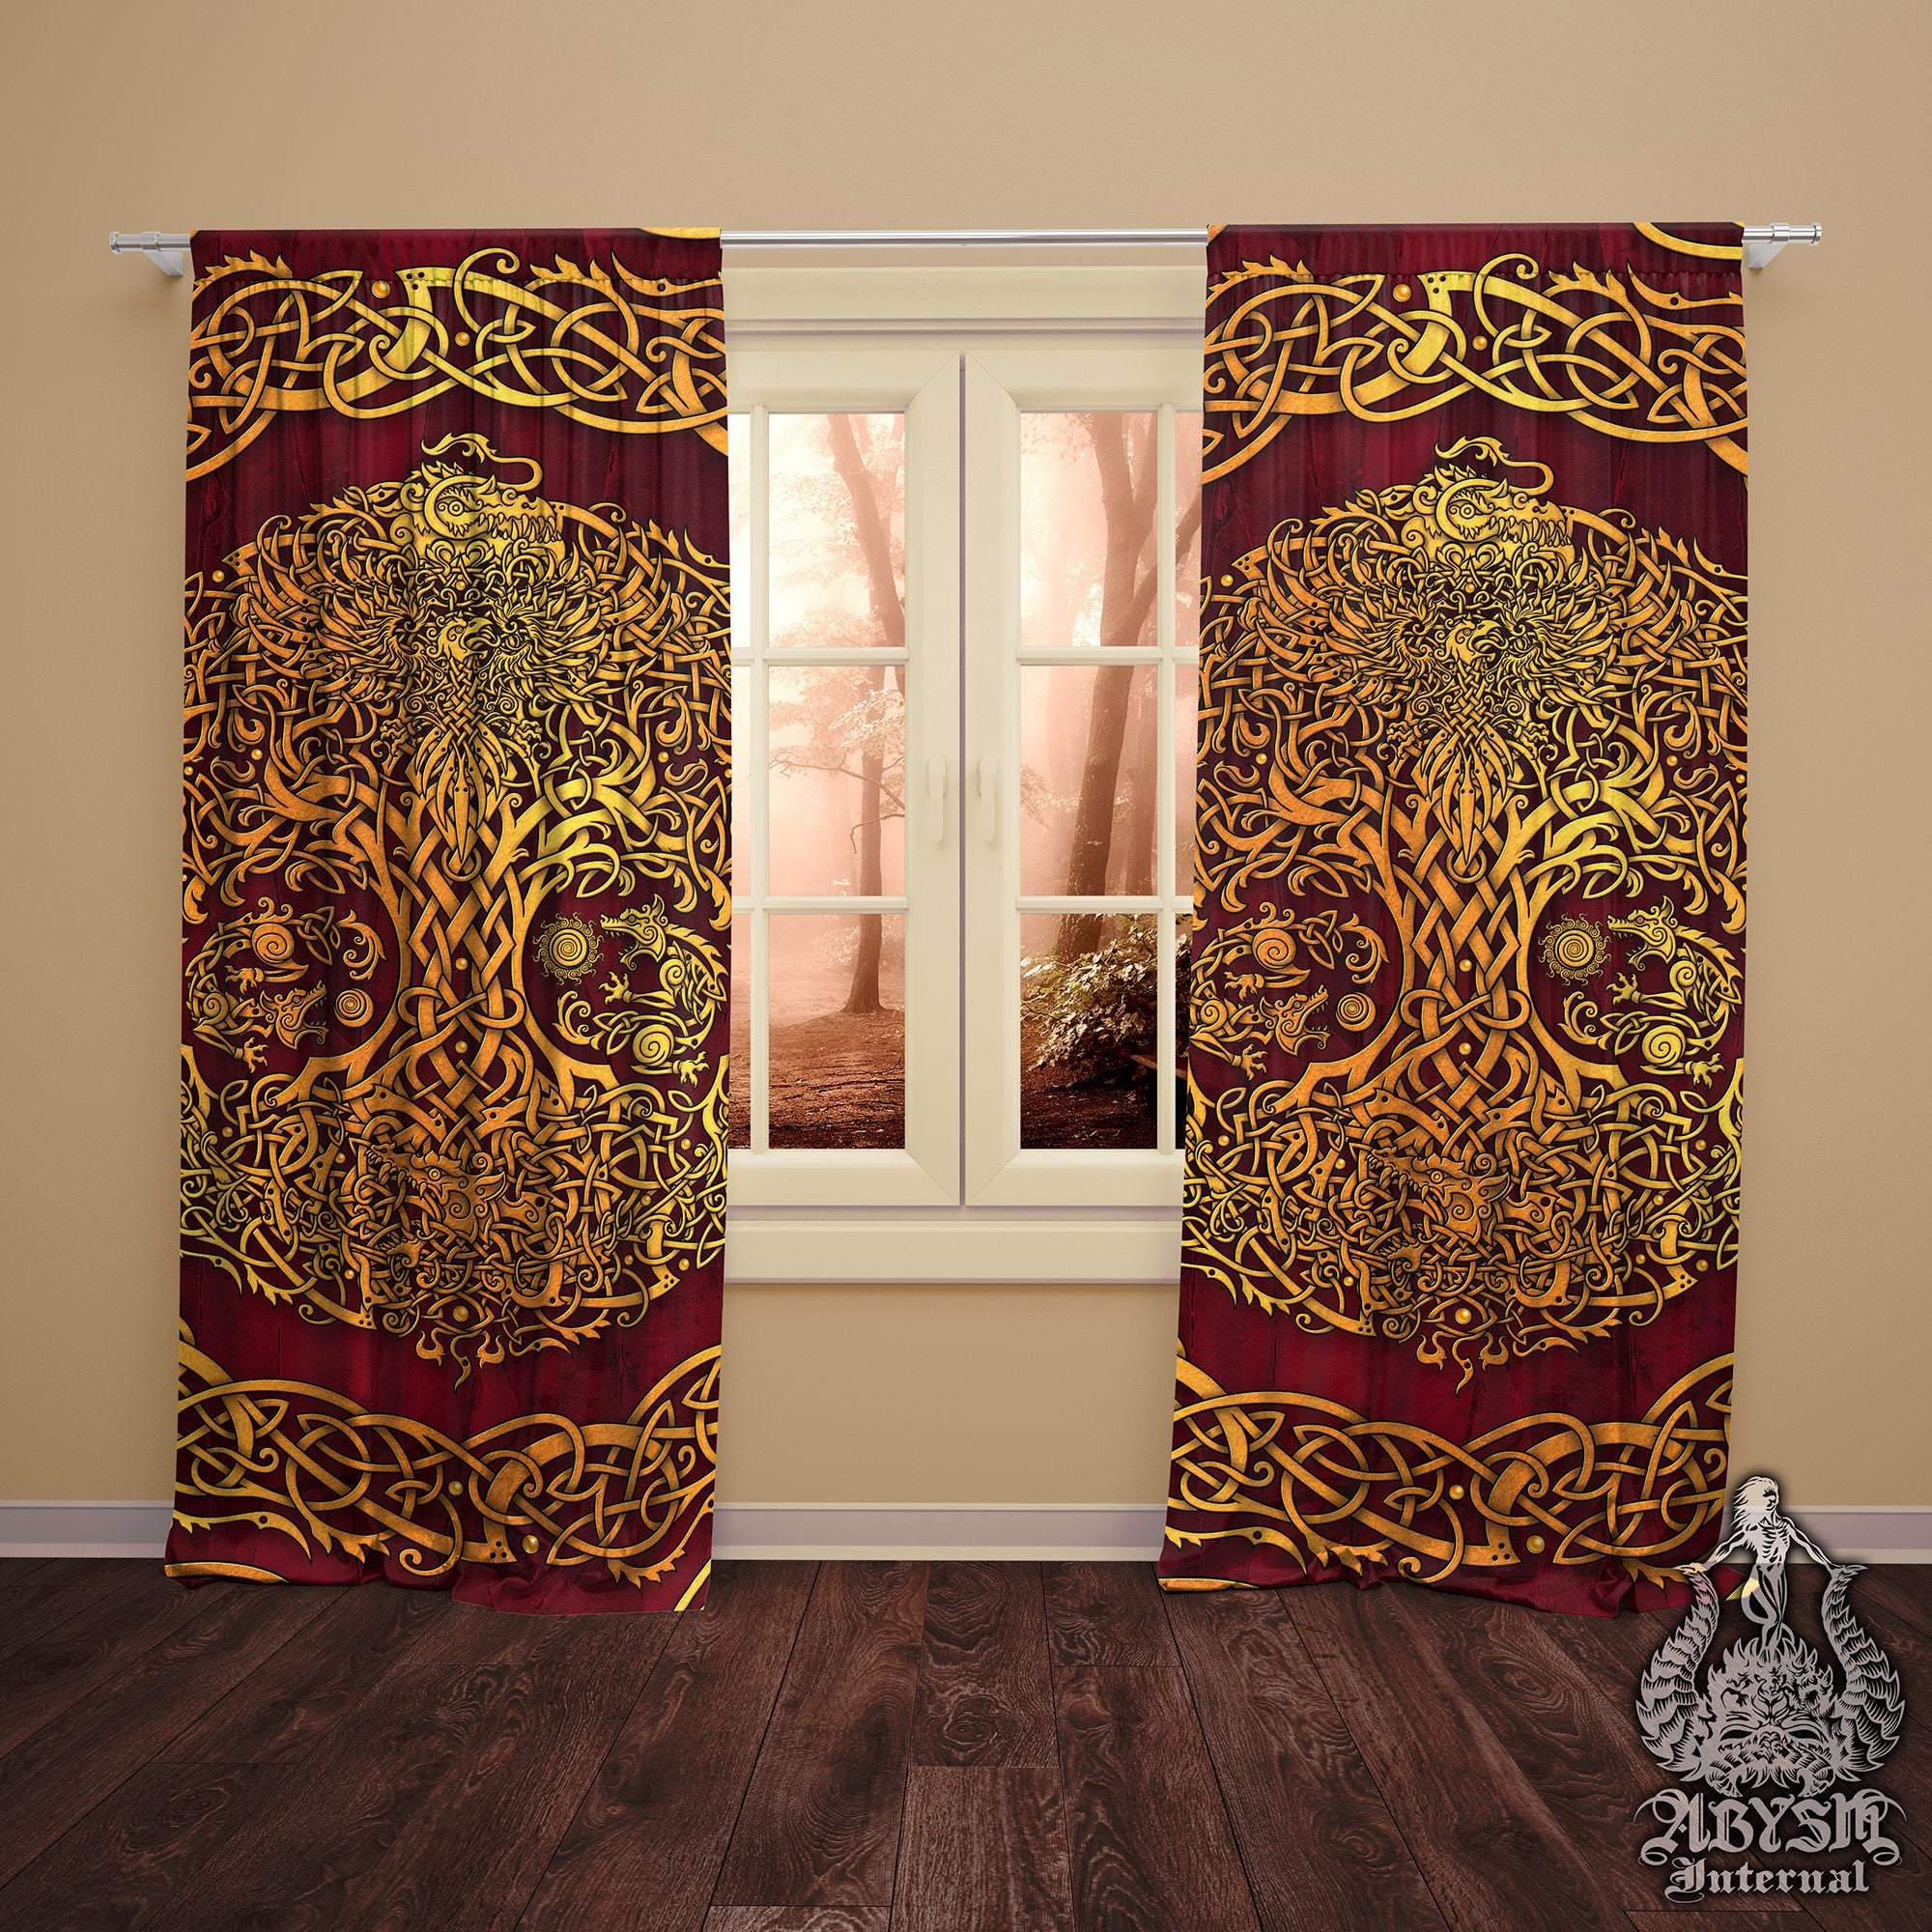 Viking Blackout Curtains, Long Window Panels, Yggdrasil, Nordic Tree of Life, Pagan Room Decor, Art Print - Gold & Red - Abysm Internal